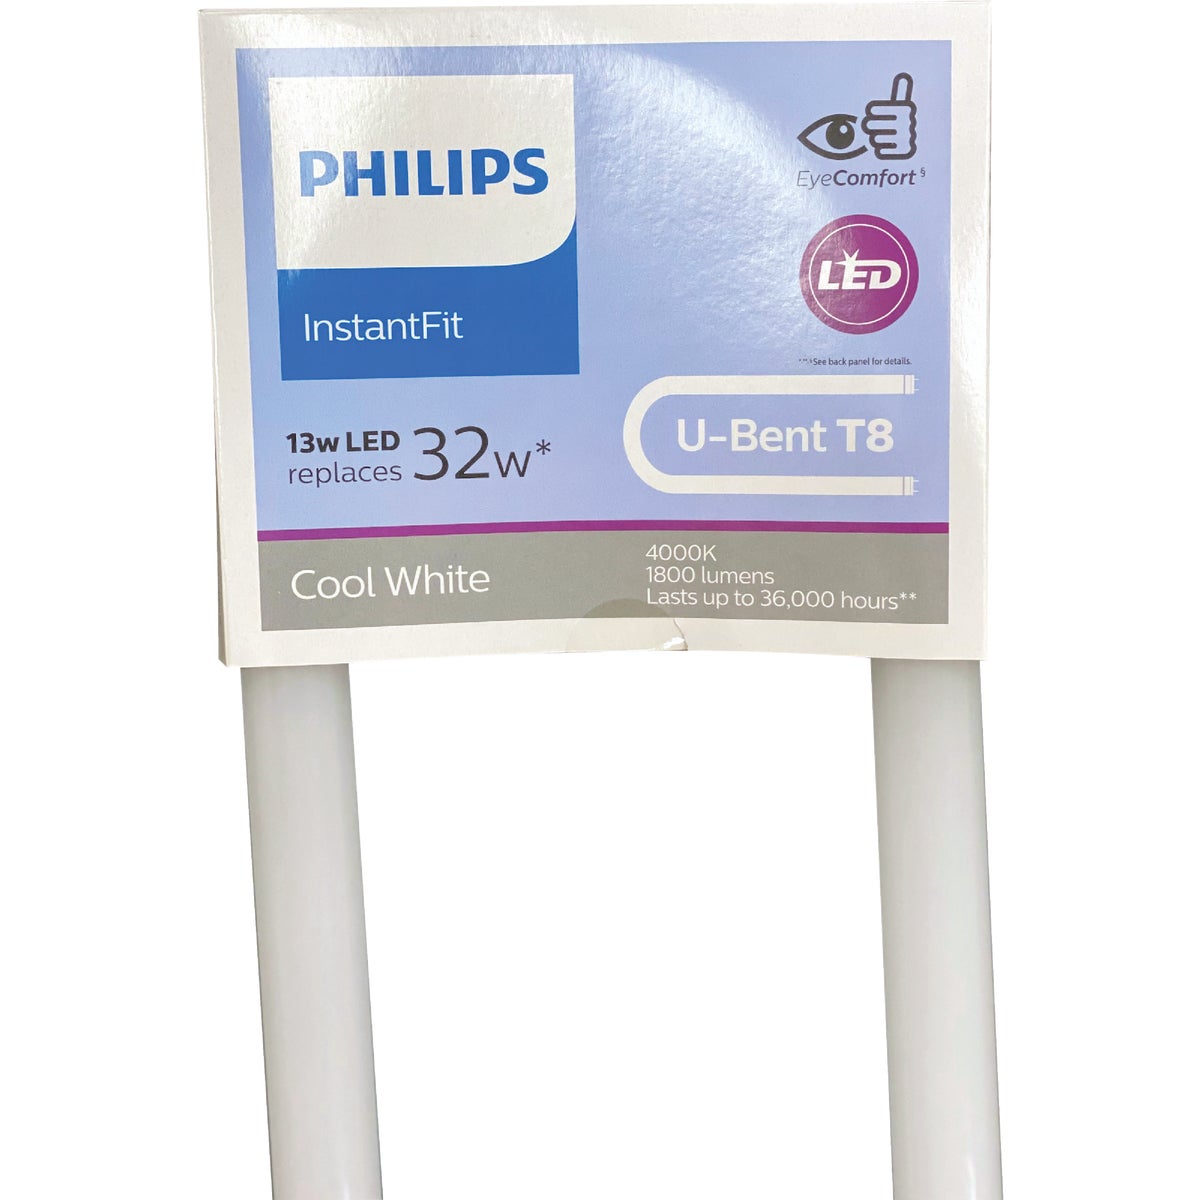 Philips InstantFit 32W Equivalent 24 In. Cool White T8 U-Bent Bi-Pin LED Tube Light Bulb